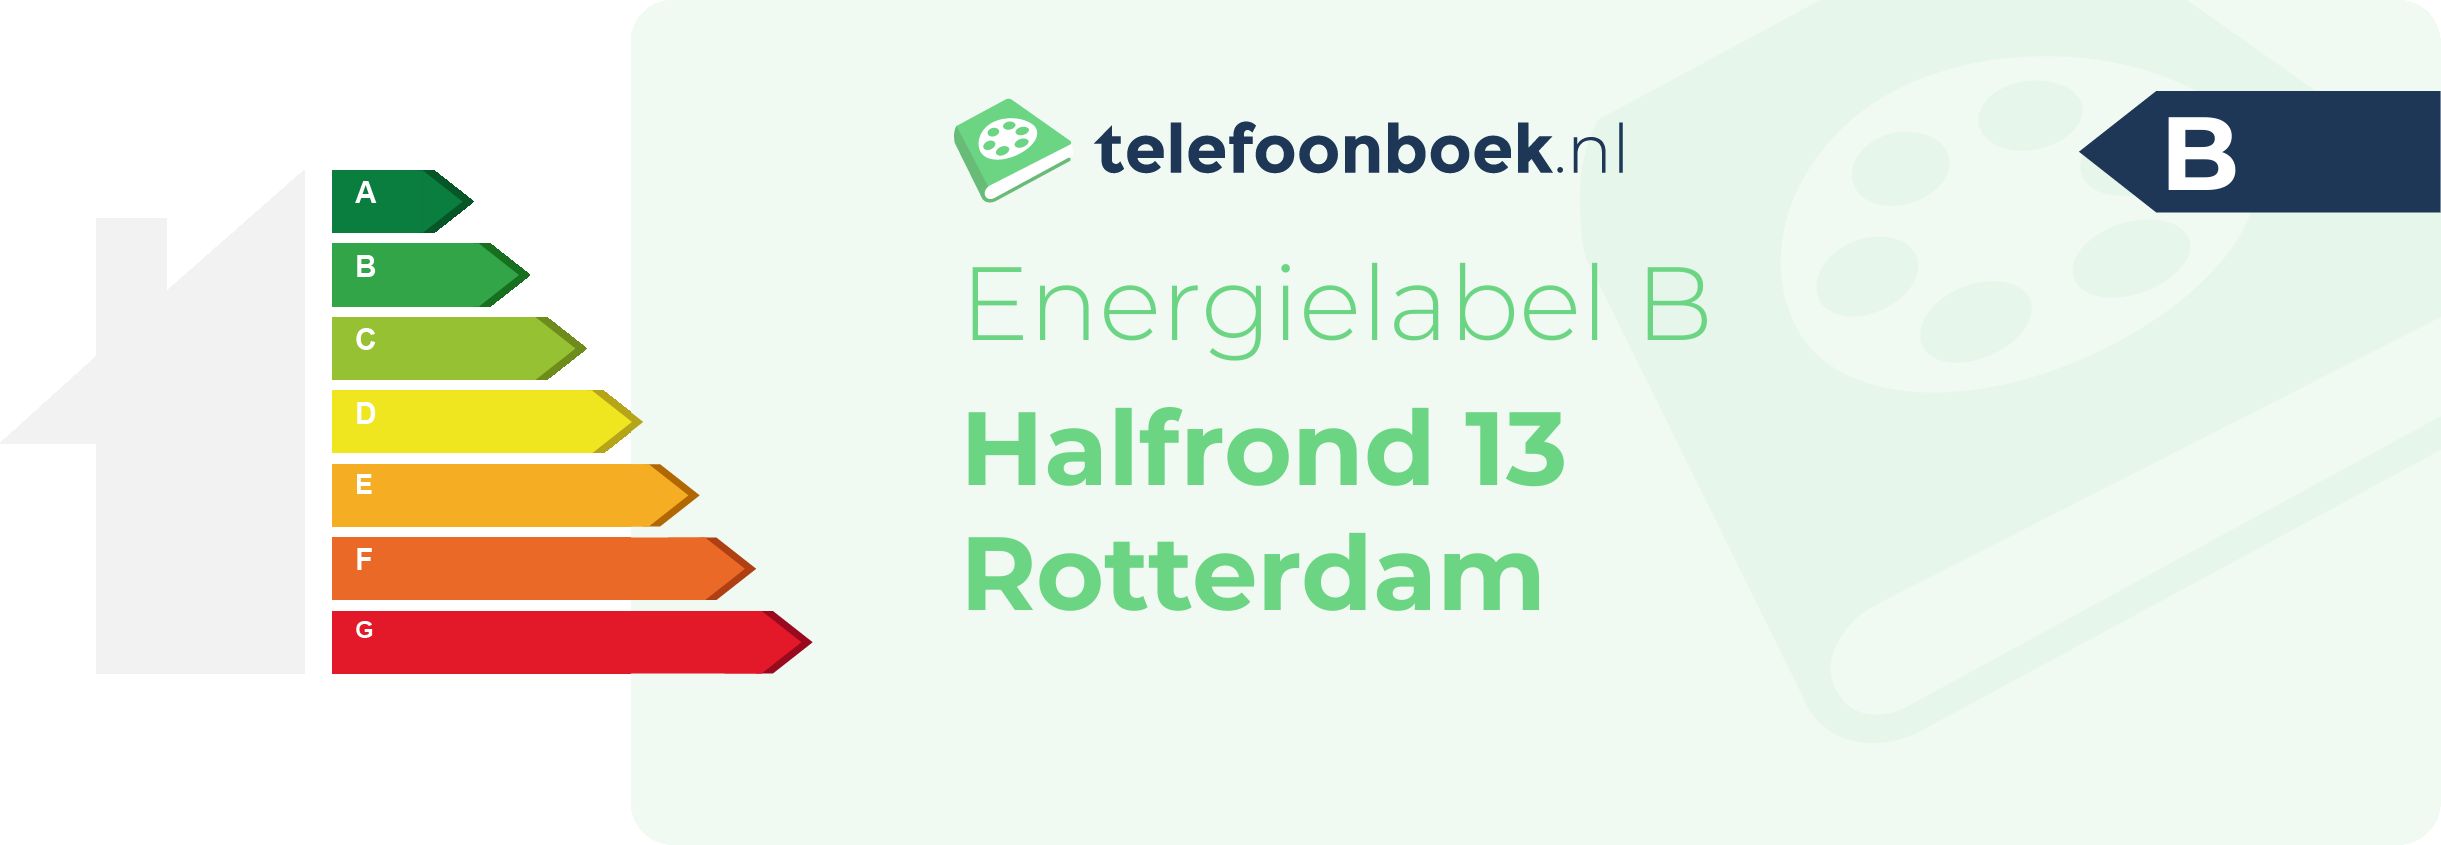 Energielabel Halfrond 13 Rotterdam